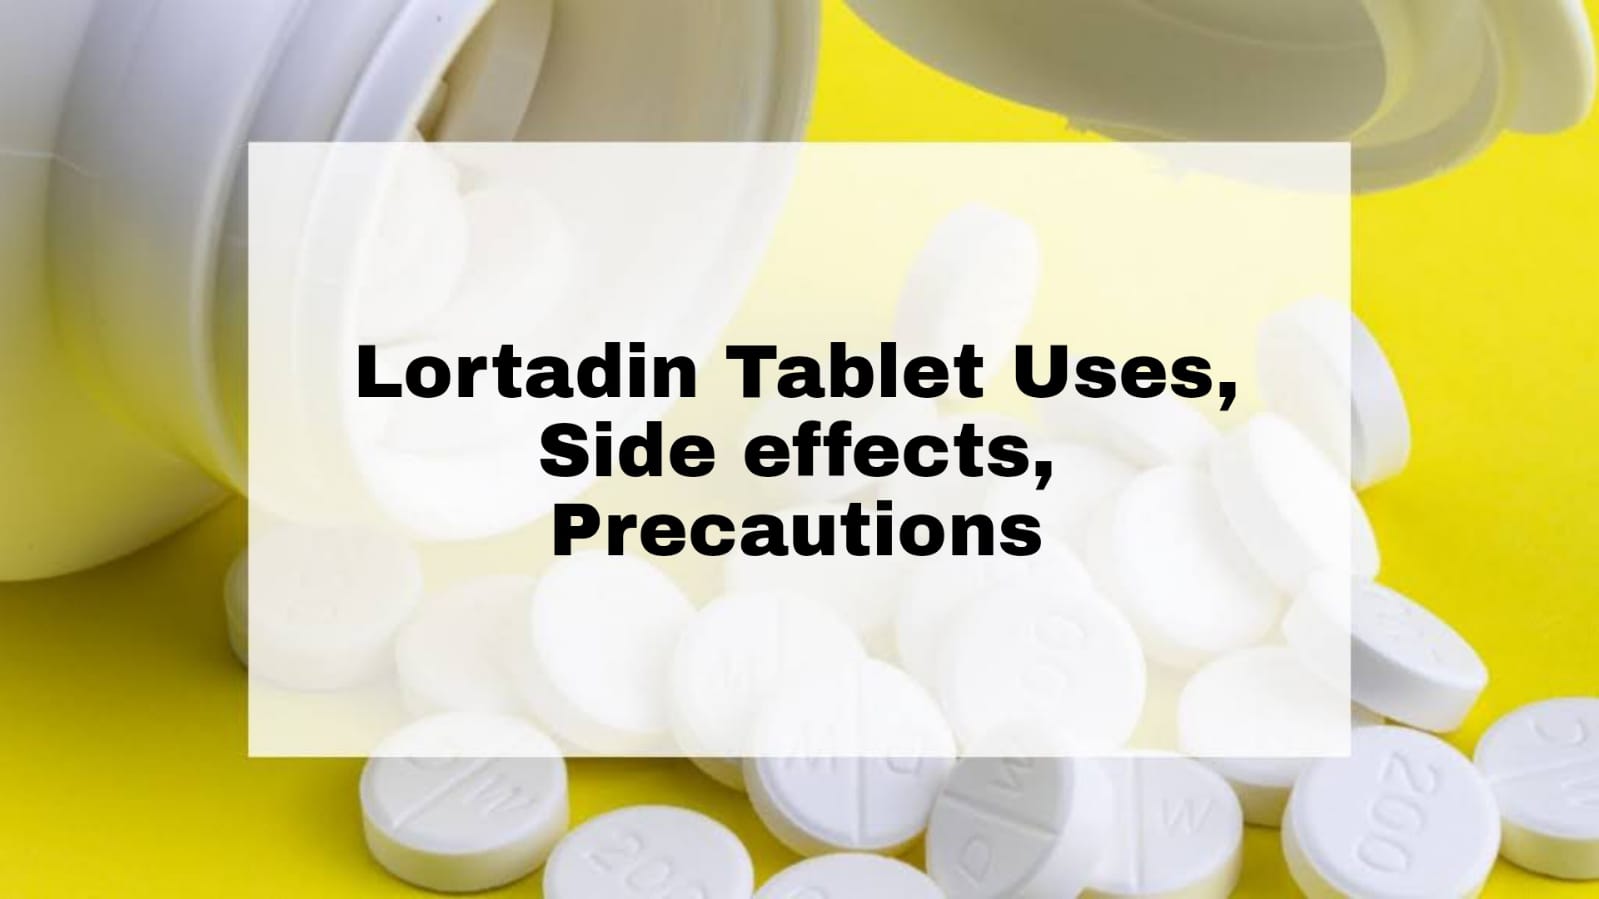 Lortadin Tablet